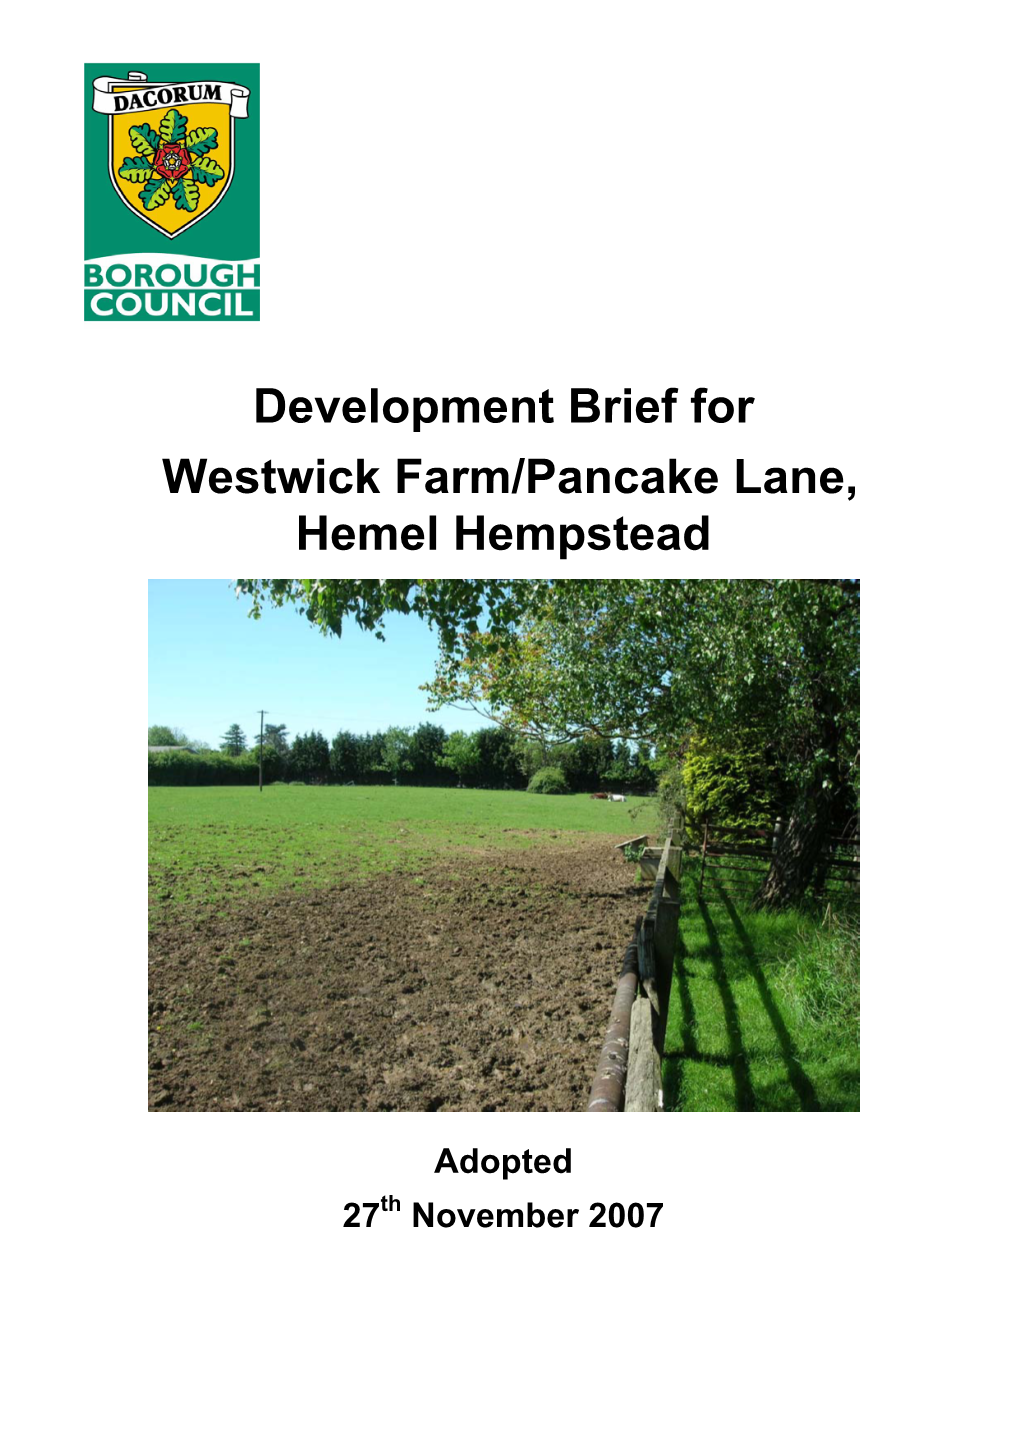 Development Brief for Westwick Farm/Pancake Lane, Hemel Hempstead